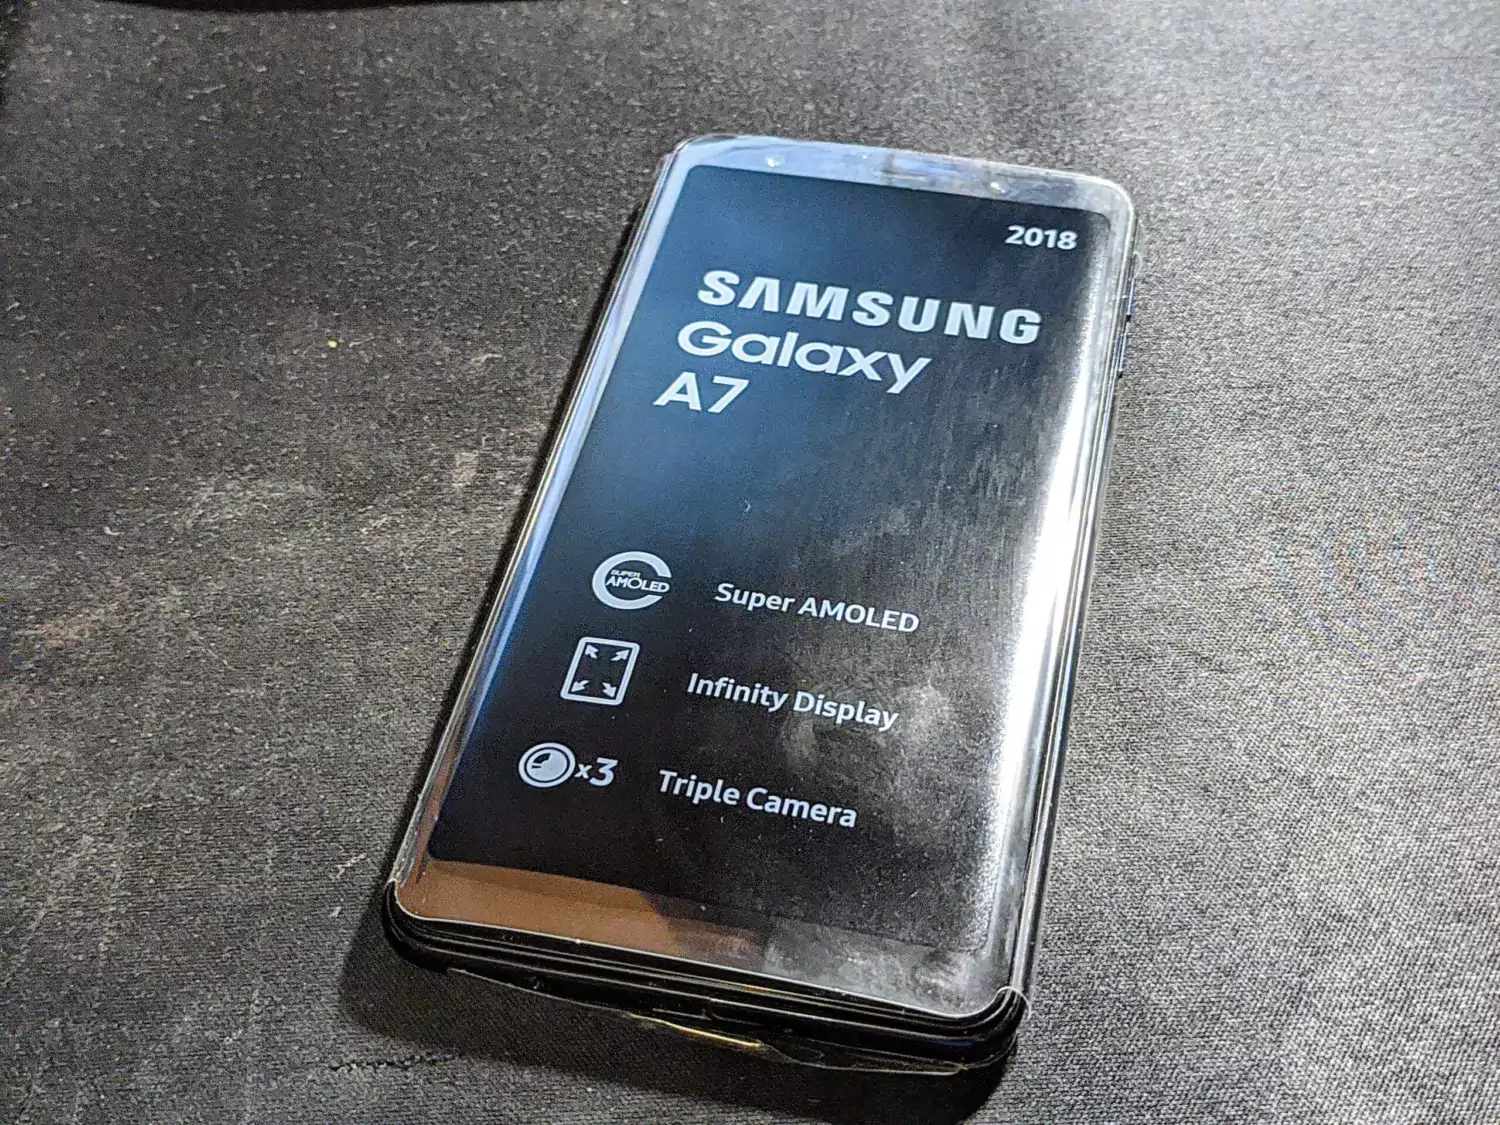 Samsung Galaxy A7 (2018) - Long-Term Review